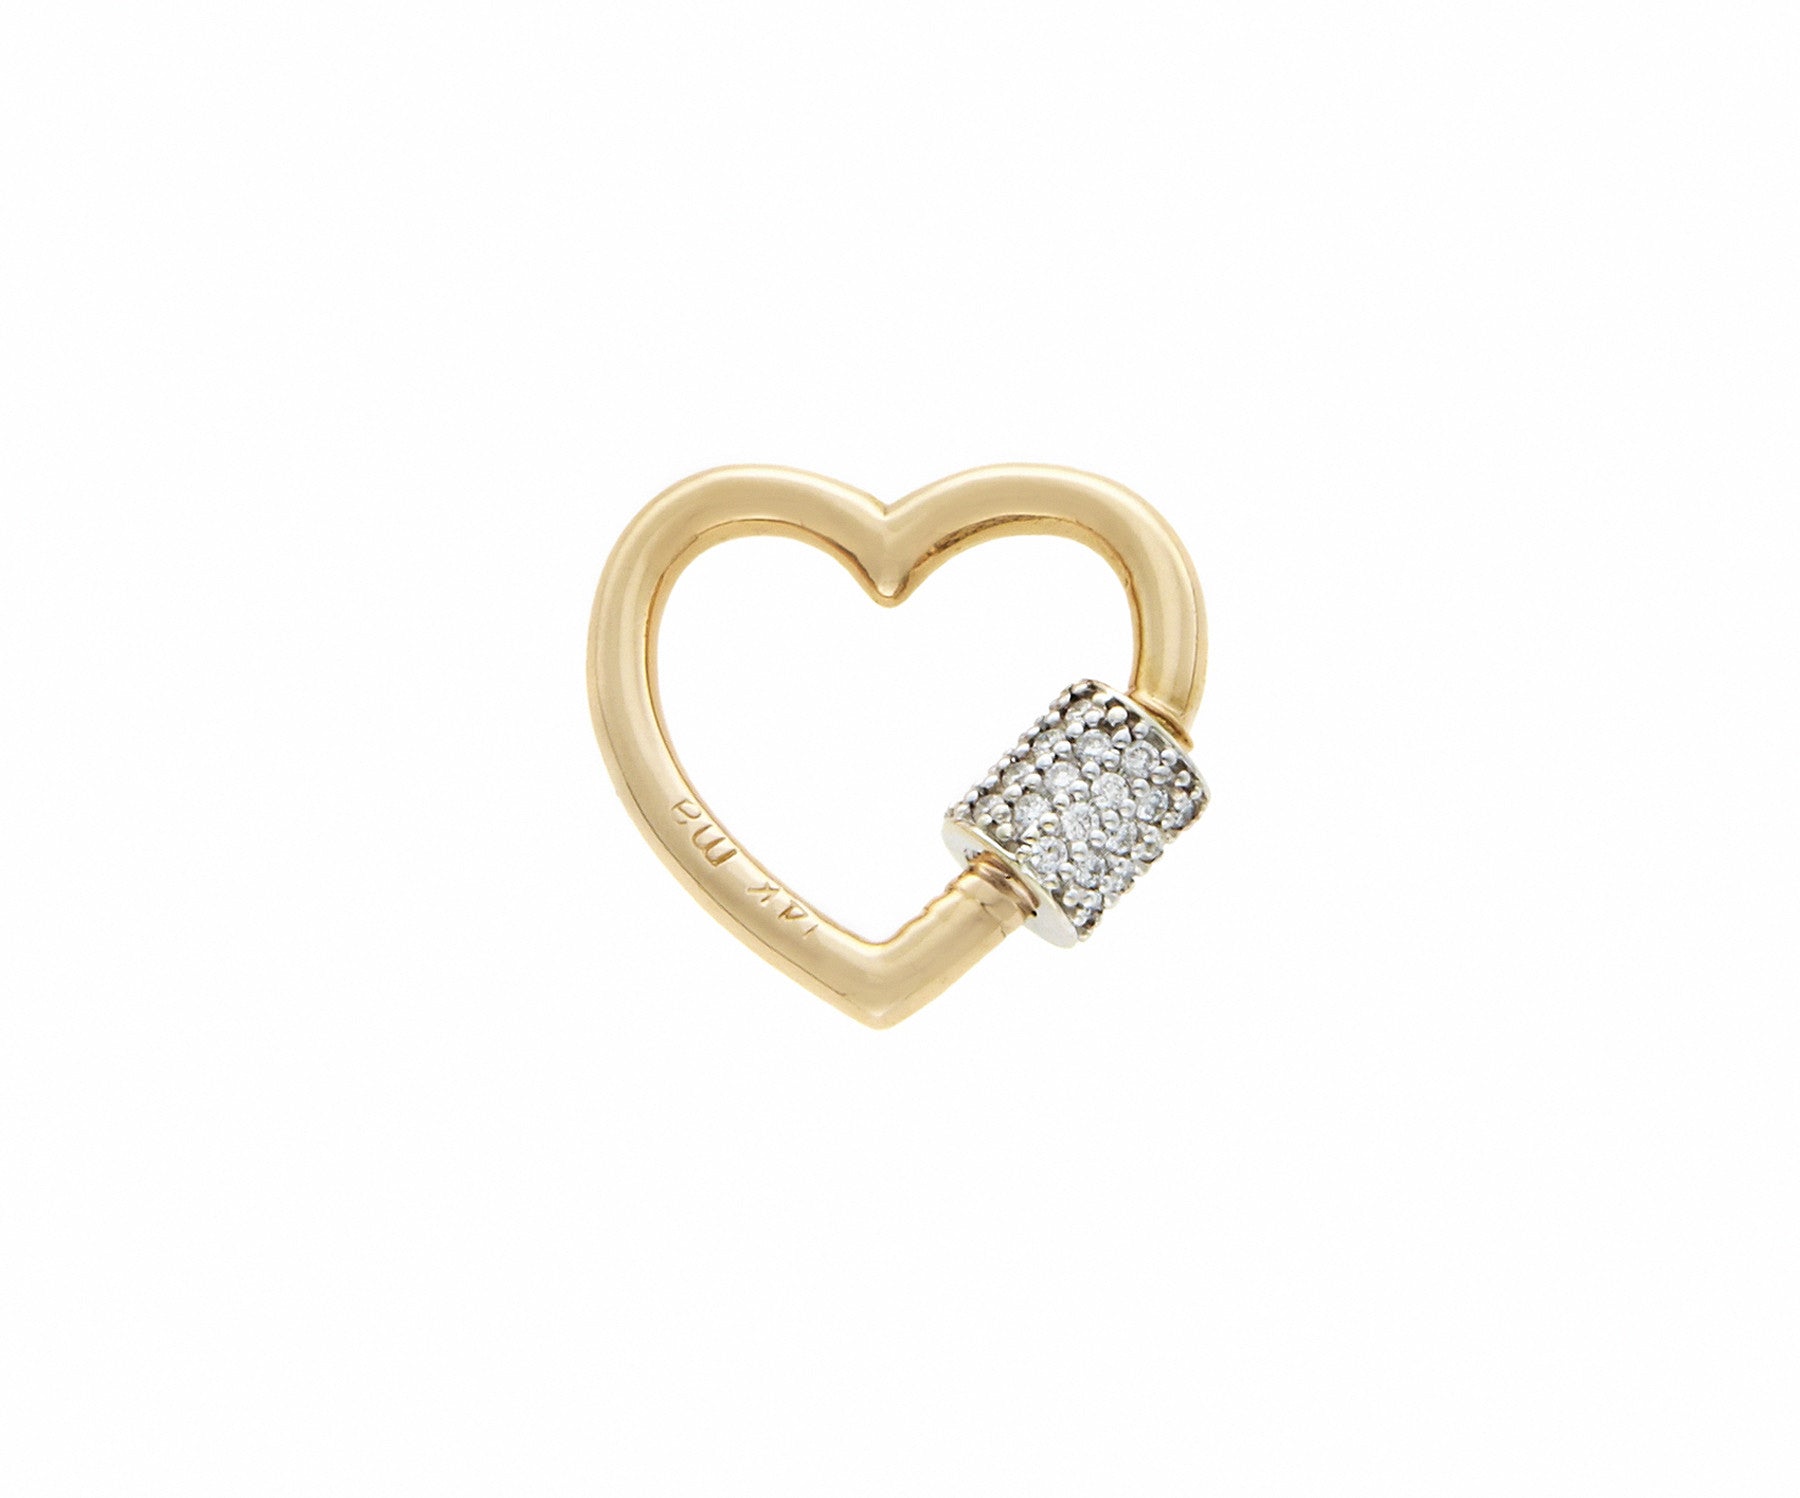 Gold heart lock charm with diamond clasp